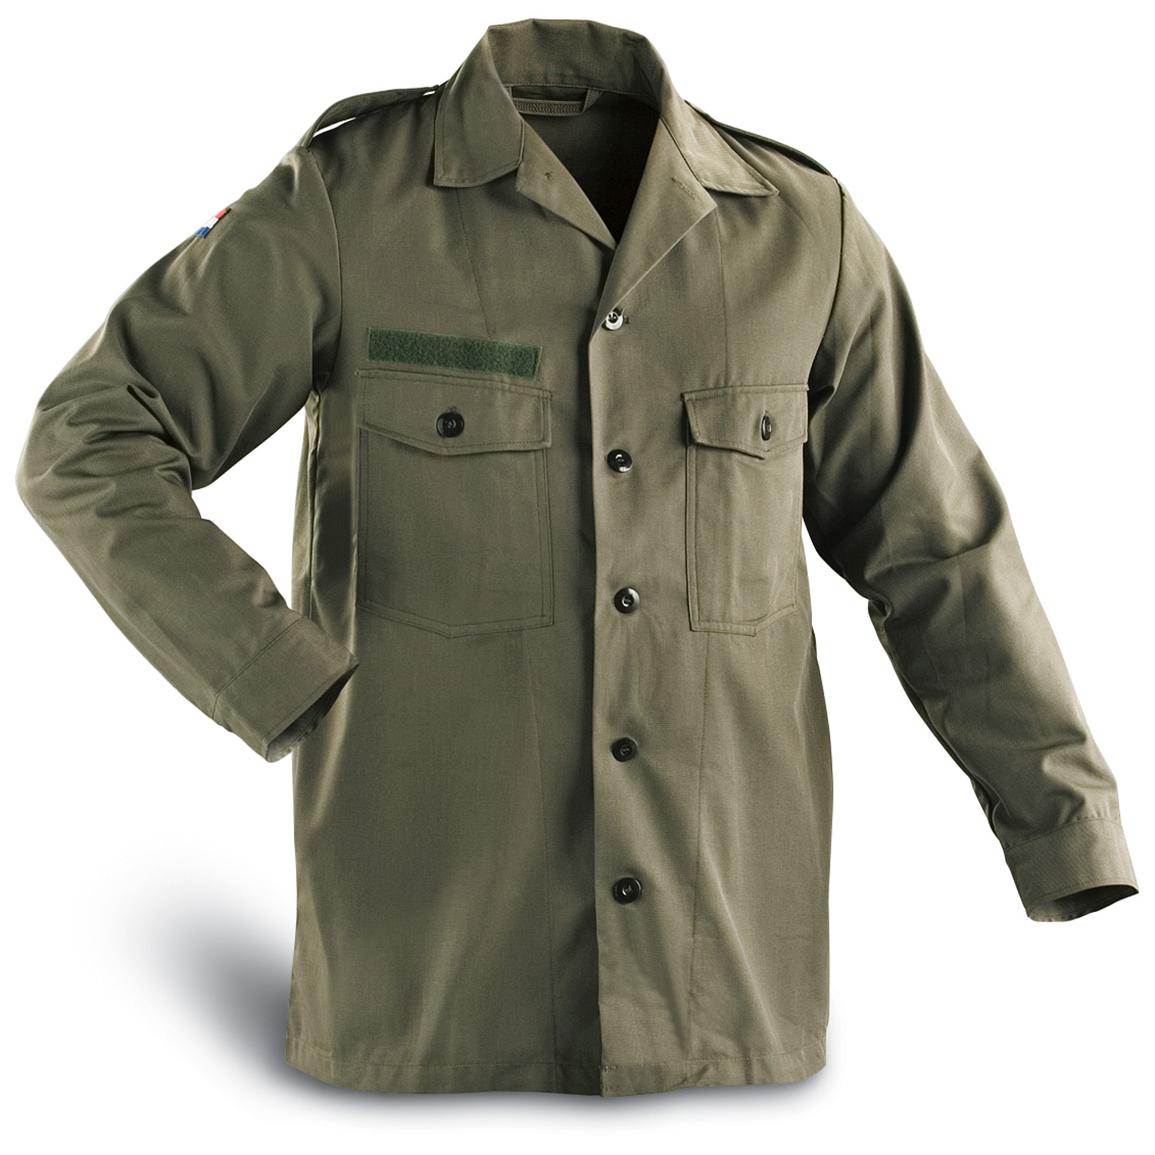 Dutch Military Army Field Shirt MAAT 50 - 52 / Large | eBay